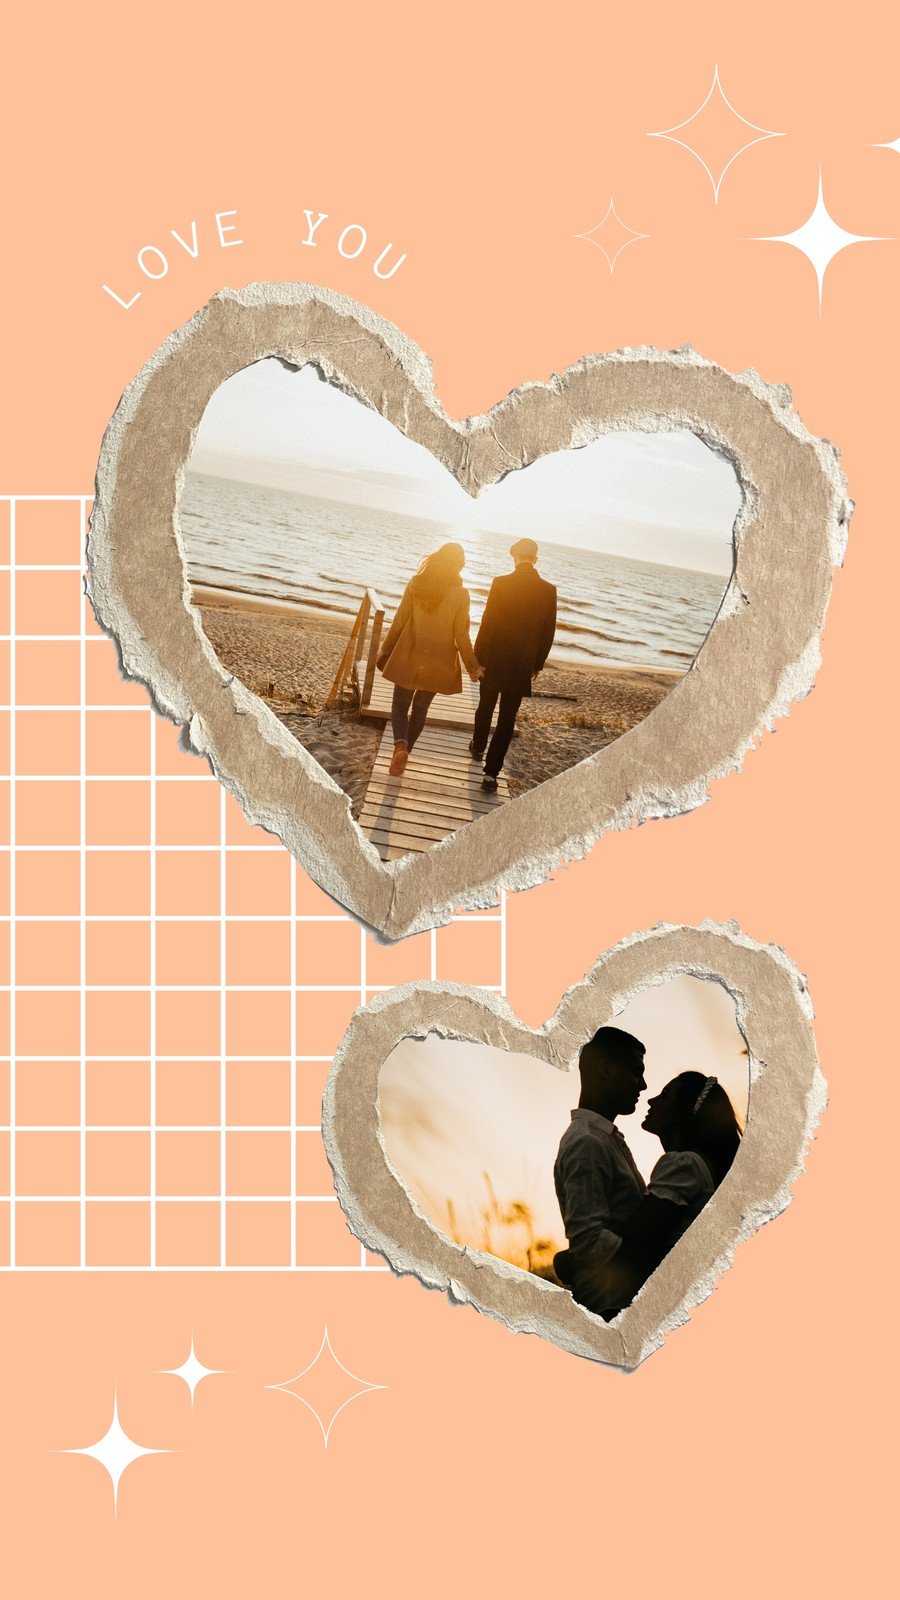 love photo frame background